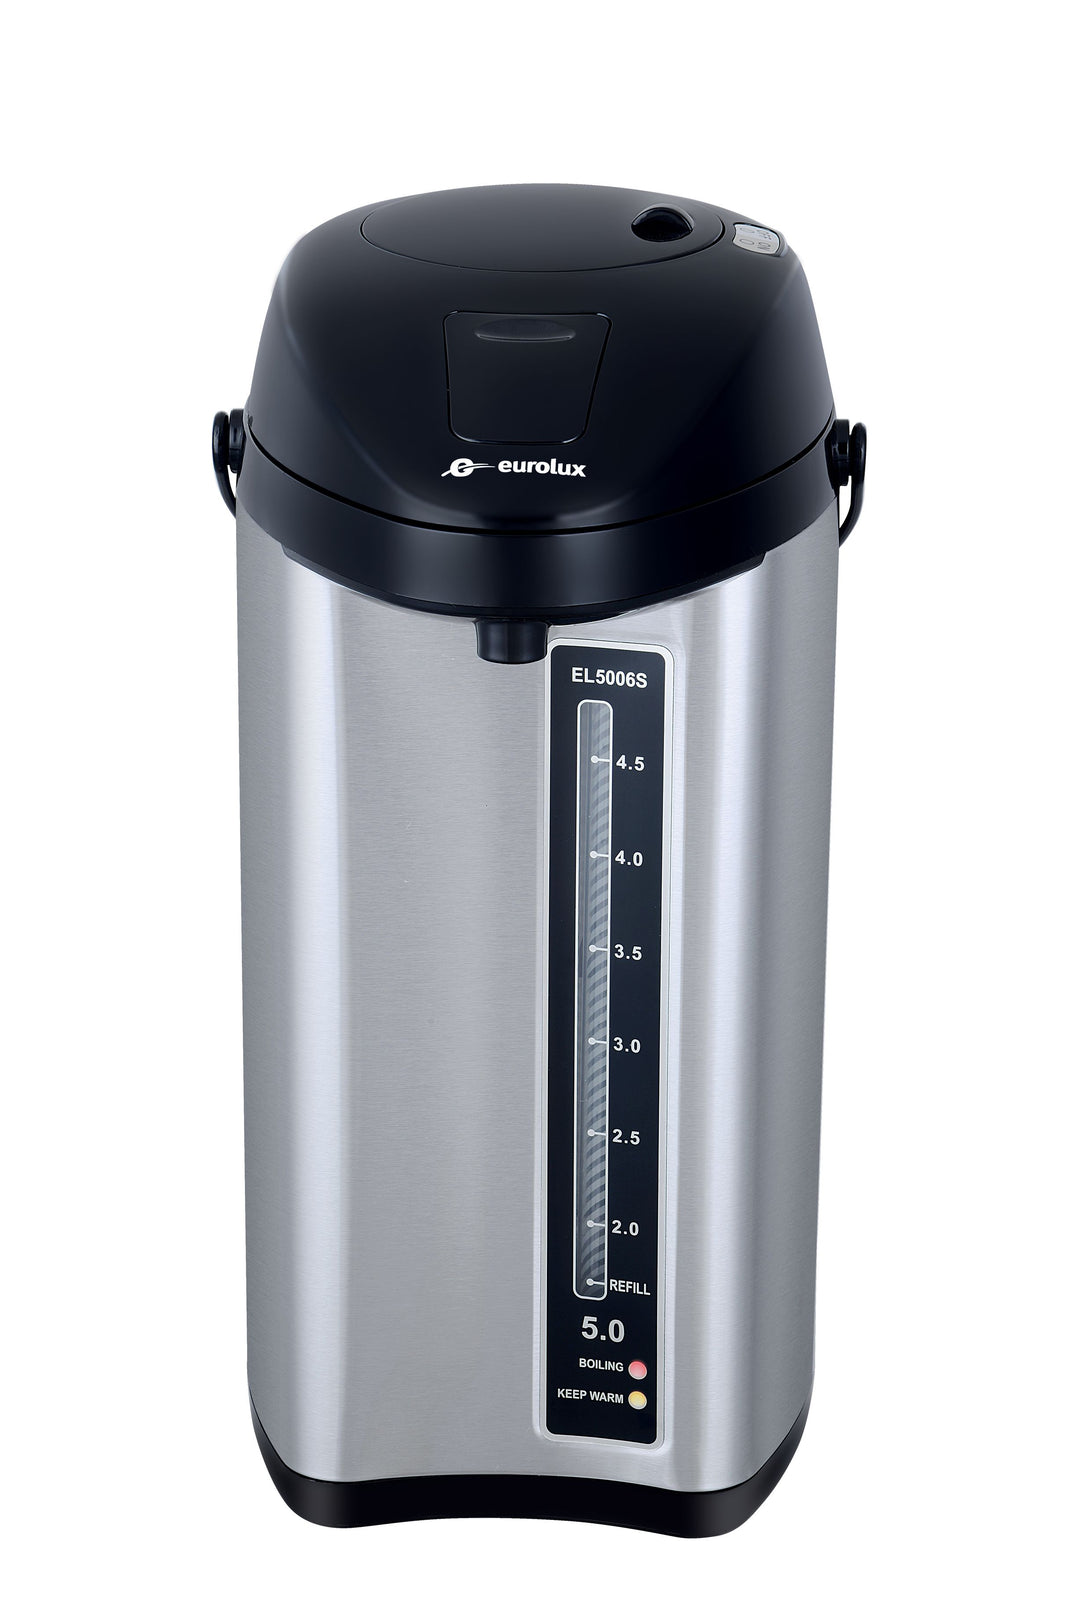 Chefman Electric Hot Water Pot Urn w/ Auto & Manual Dispense